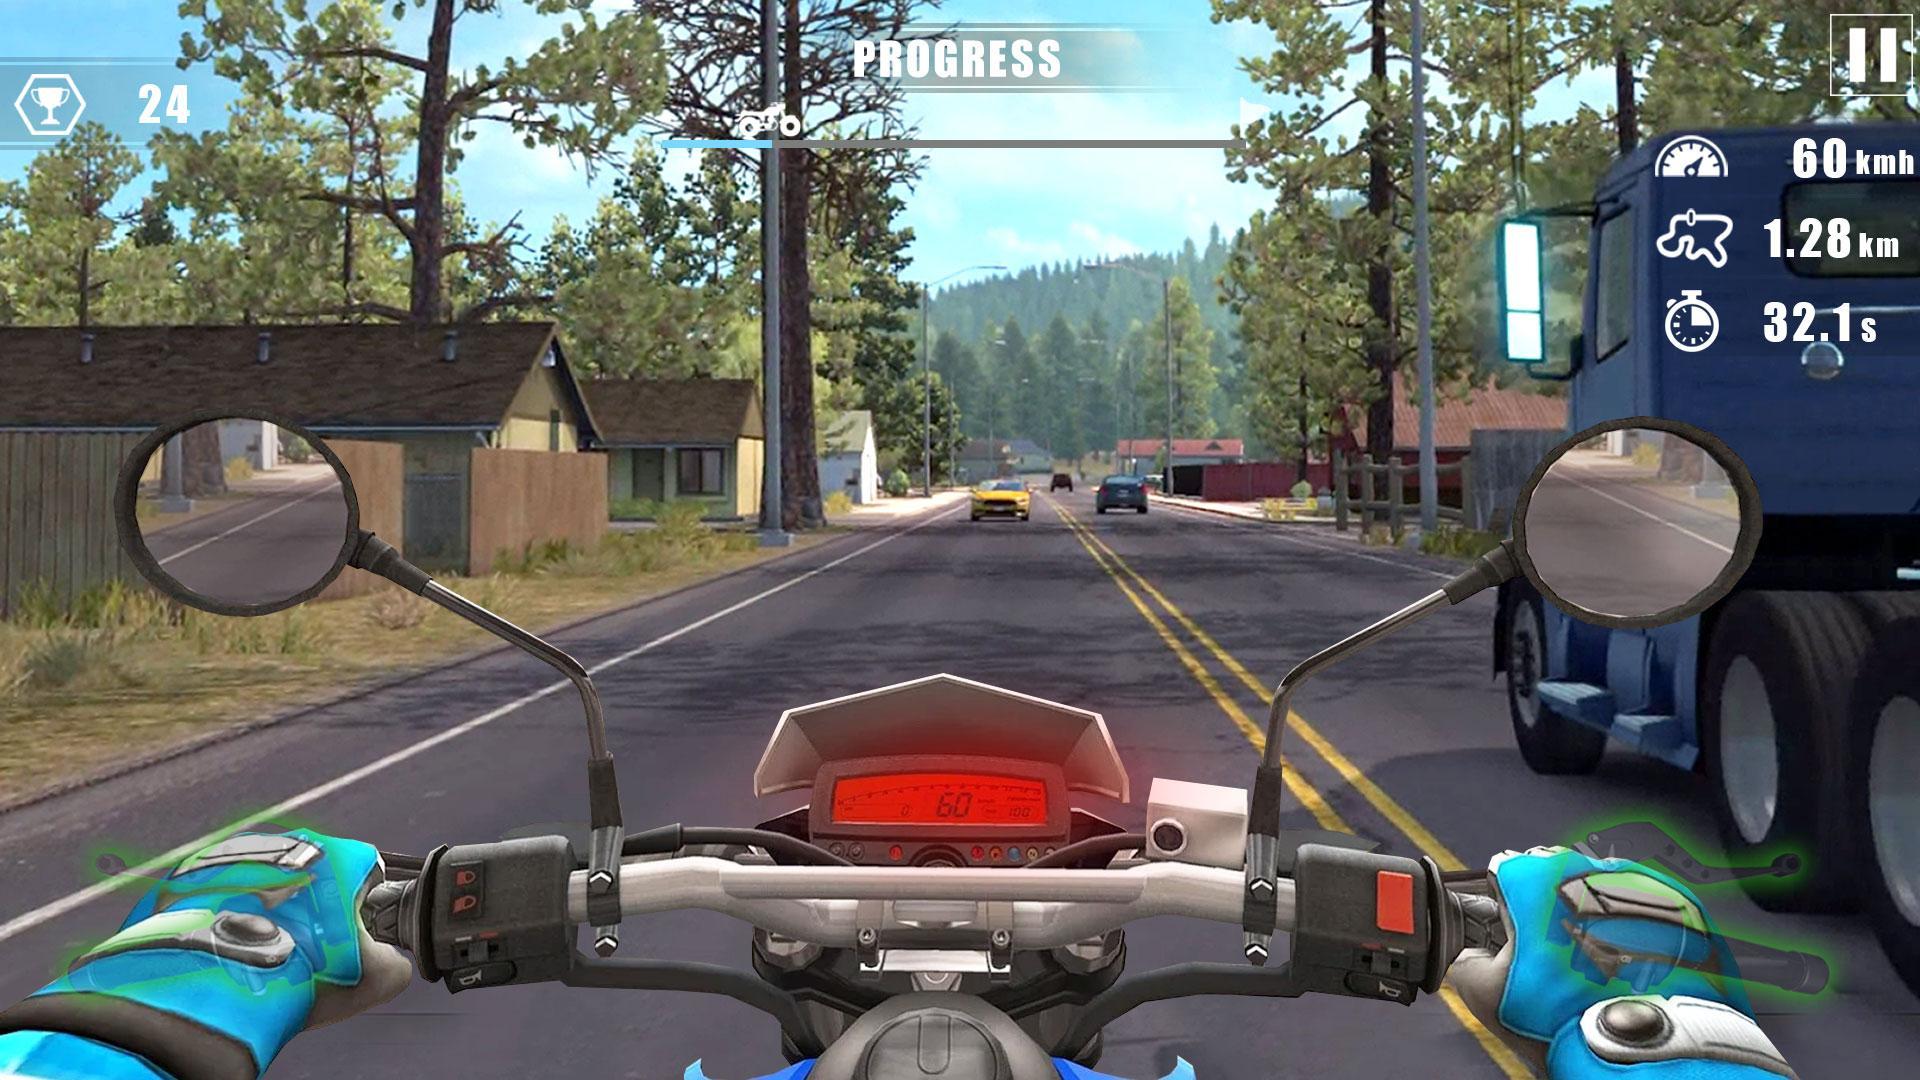 Screenshot 1 of การแข่งขันจักรยานยนต์ Moto: การขับรถ 3.2